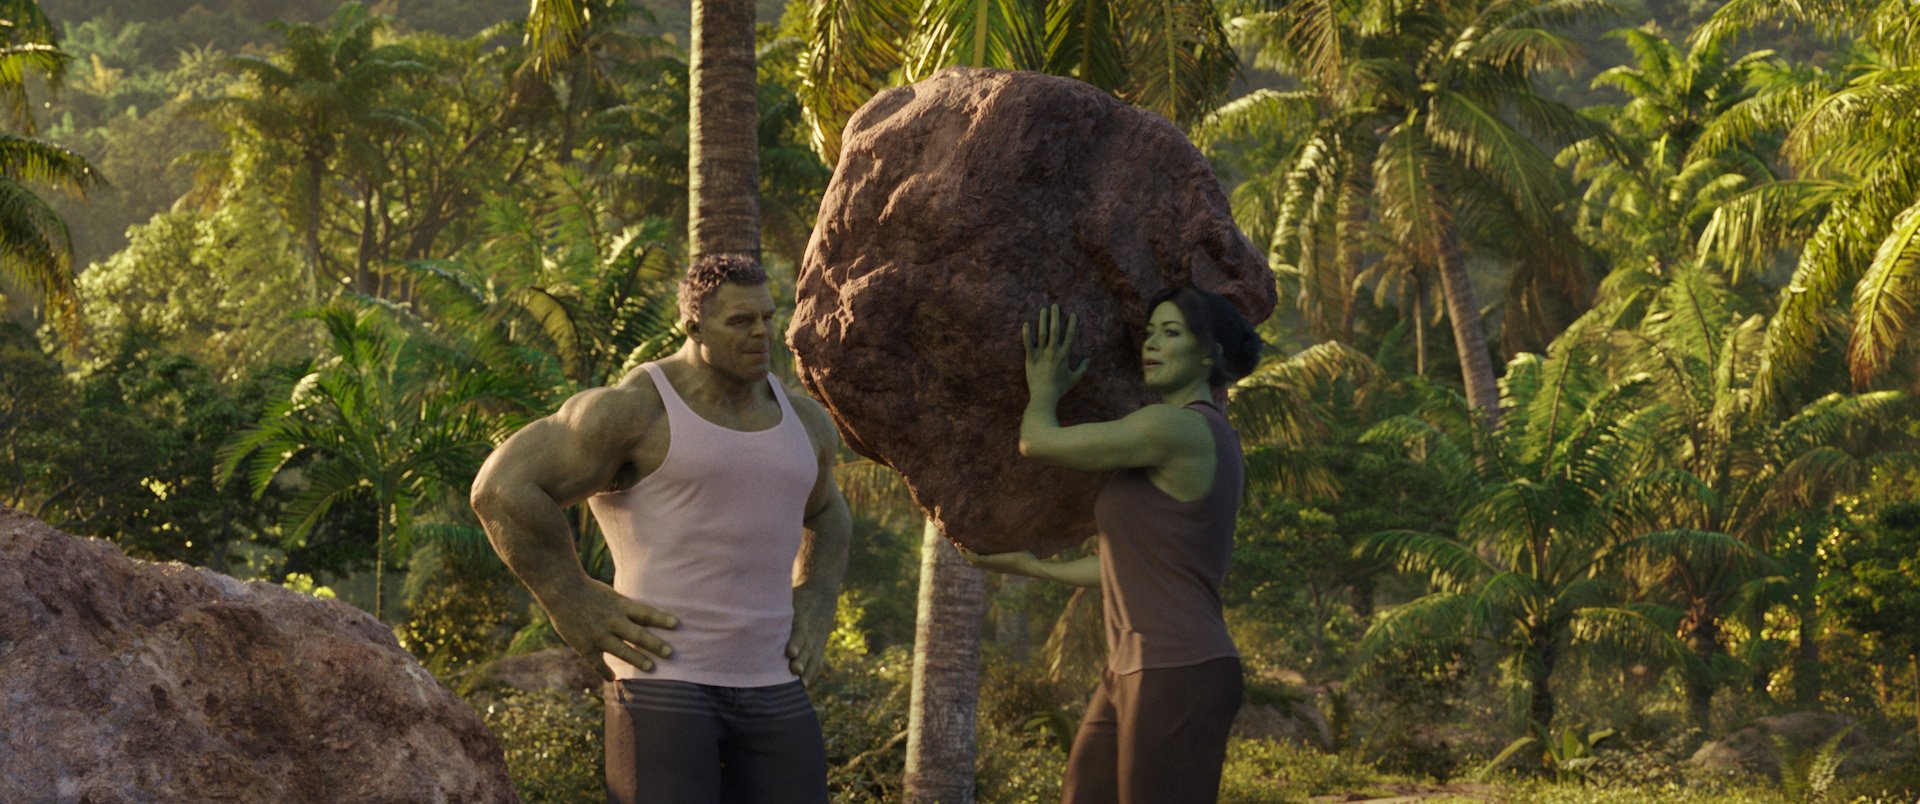 Mark Ruffalo as Bruce Banner/ Hulk and Tatiana Maslany as Jennifer Walters/ She-Hulk in She-Hulk: Attorney At Law